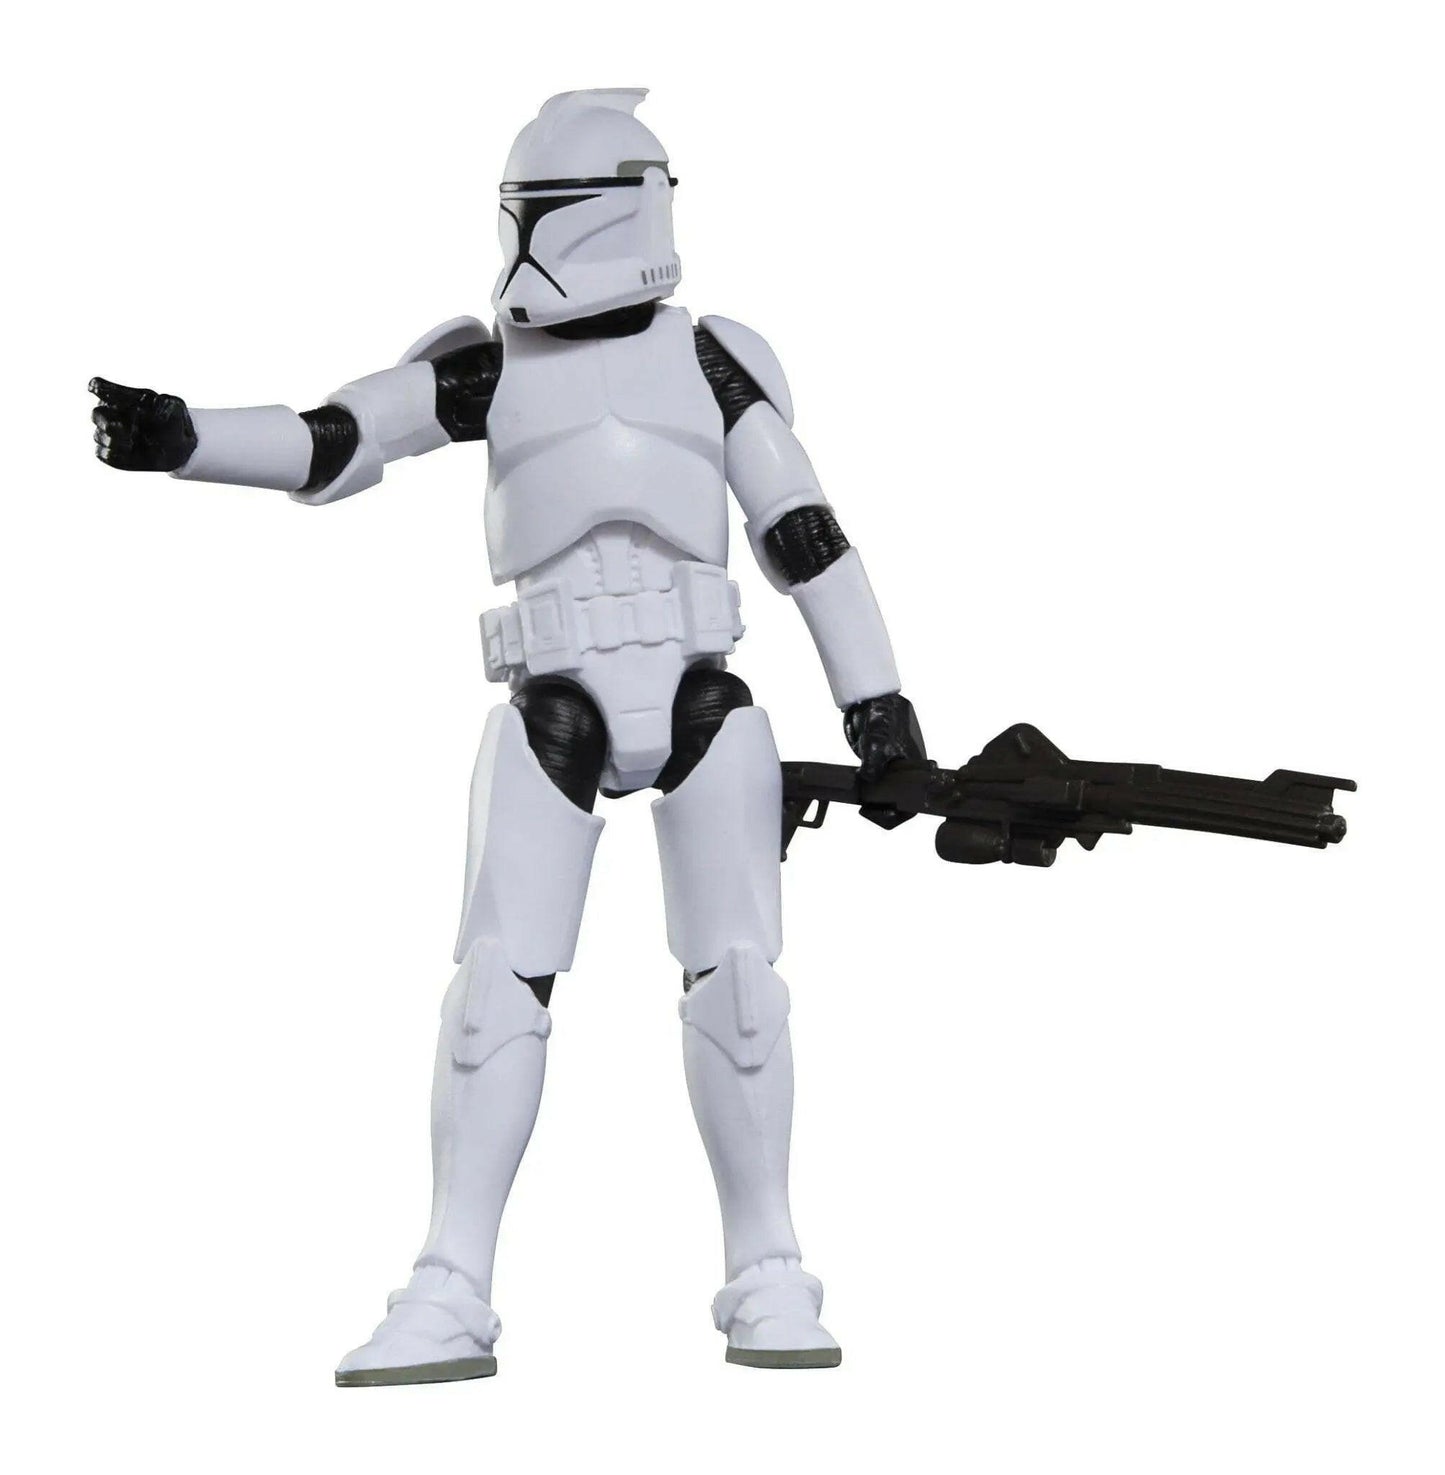 Pre-Order! Star Wars Vintage Collection Episode II Actionfigur Phase I Clone Trooper 10cm - Toy-Storage